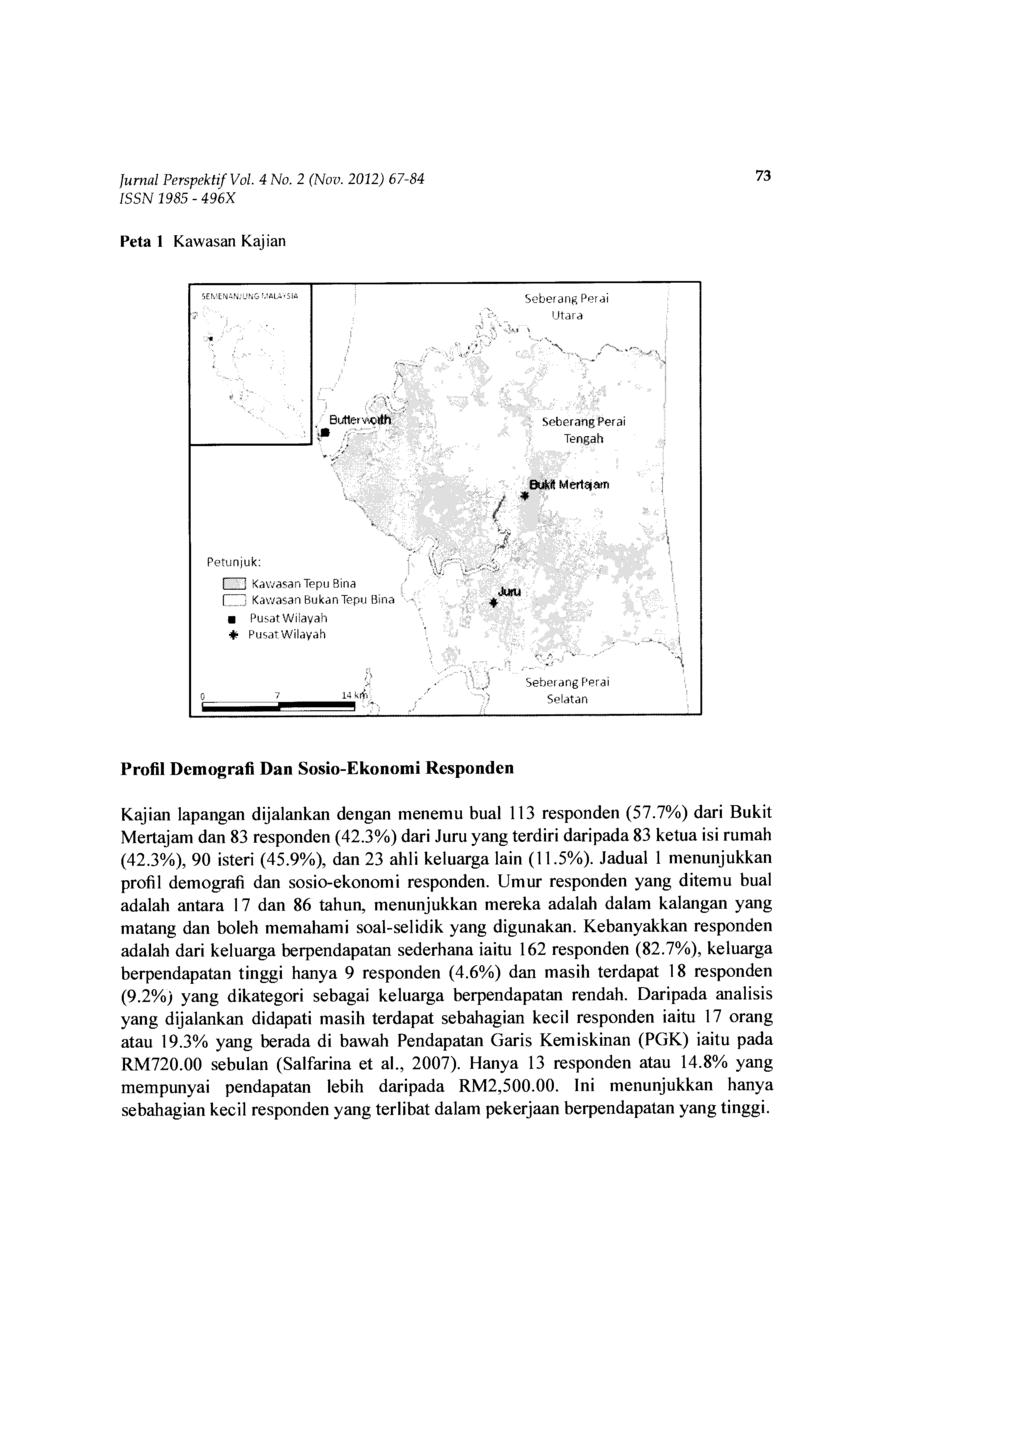 Jurnal Perspektif Vol. 4 No. 2 (Nov. 2012) 67-84 73 Peta 1 Kawasan Kajian SENIEN,,'N SeberanB Perai litara Sf?